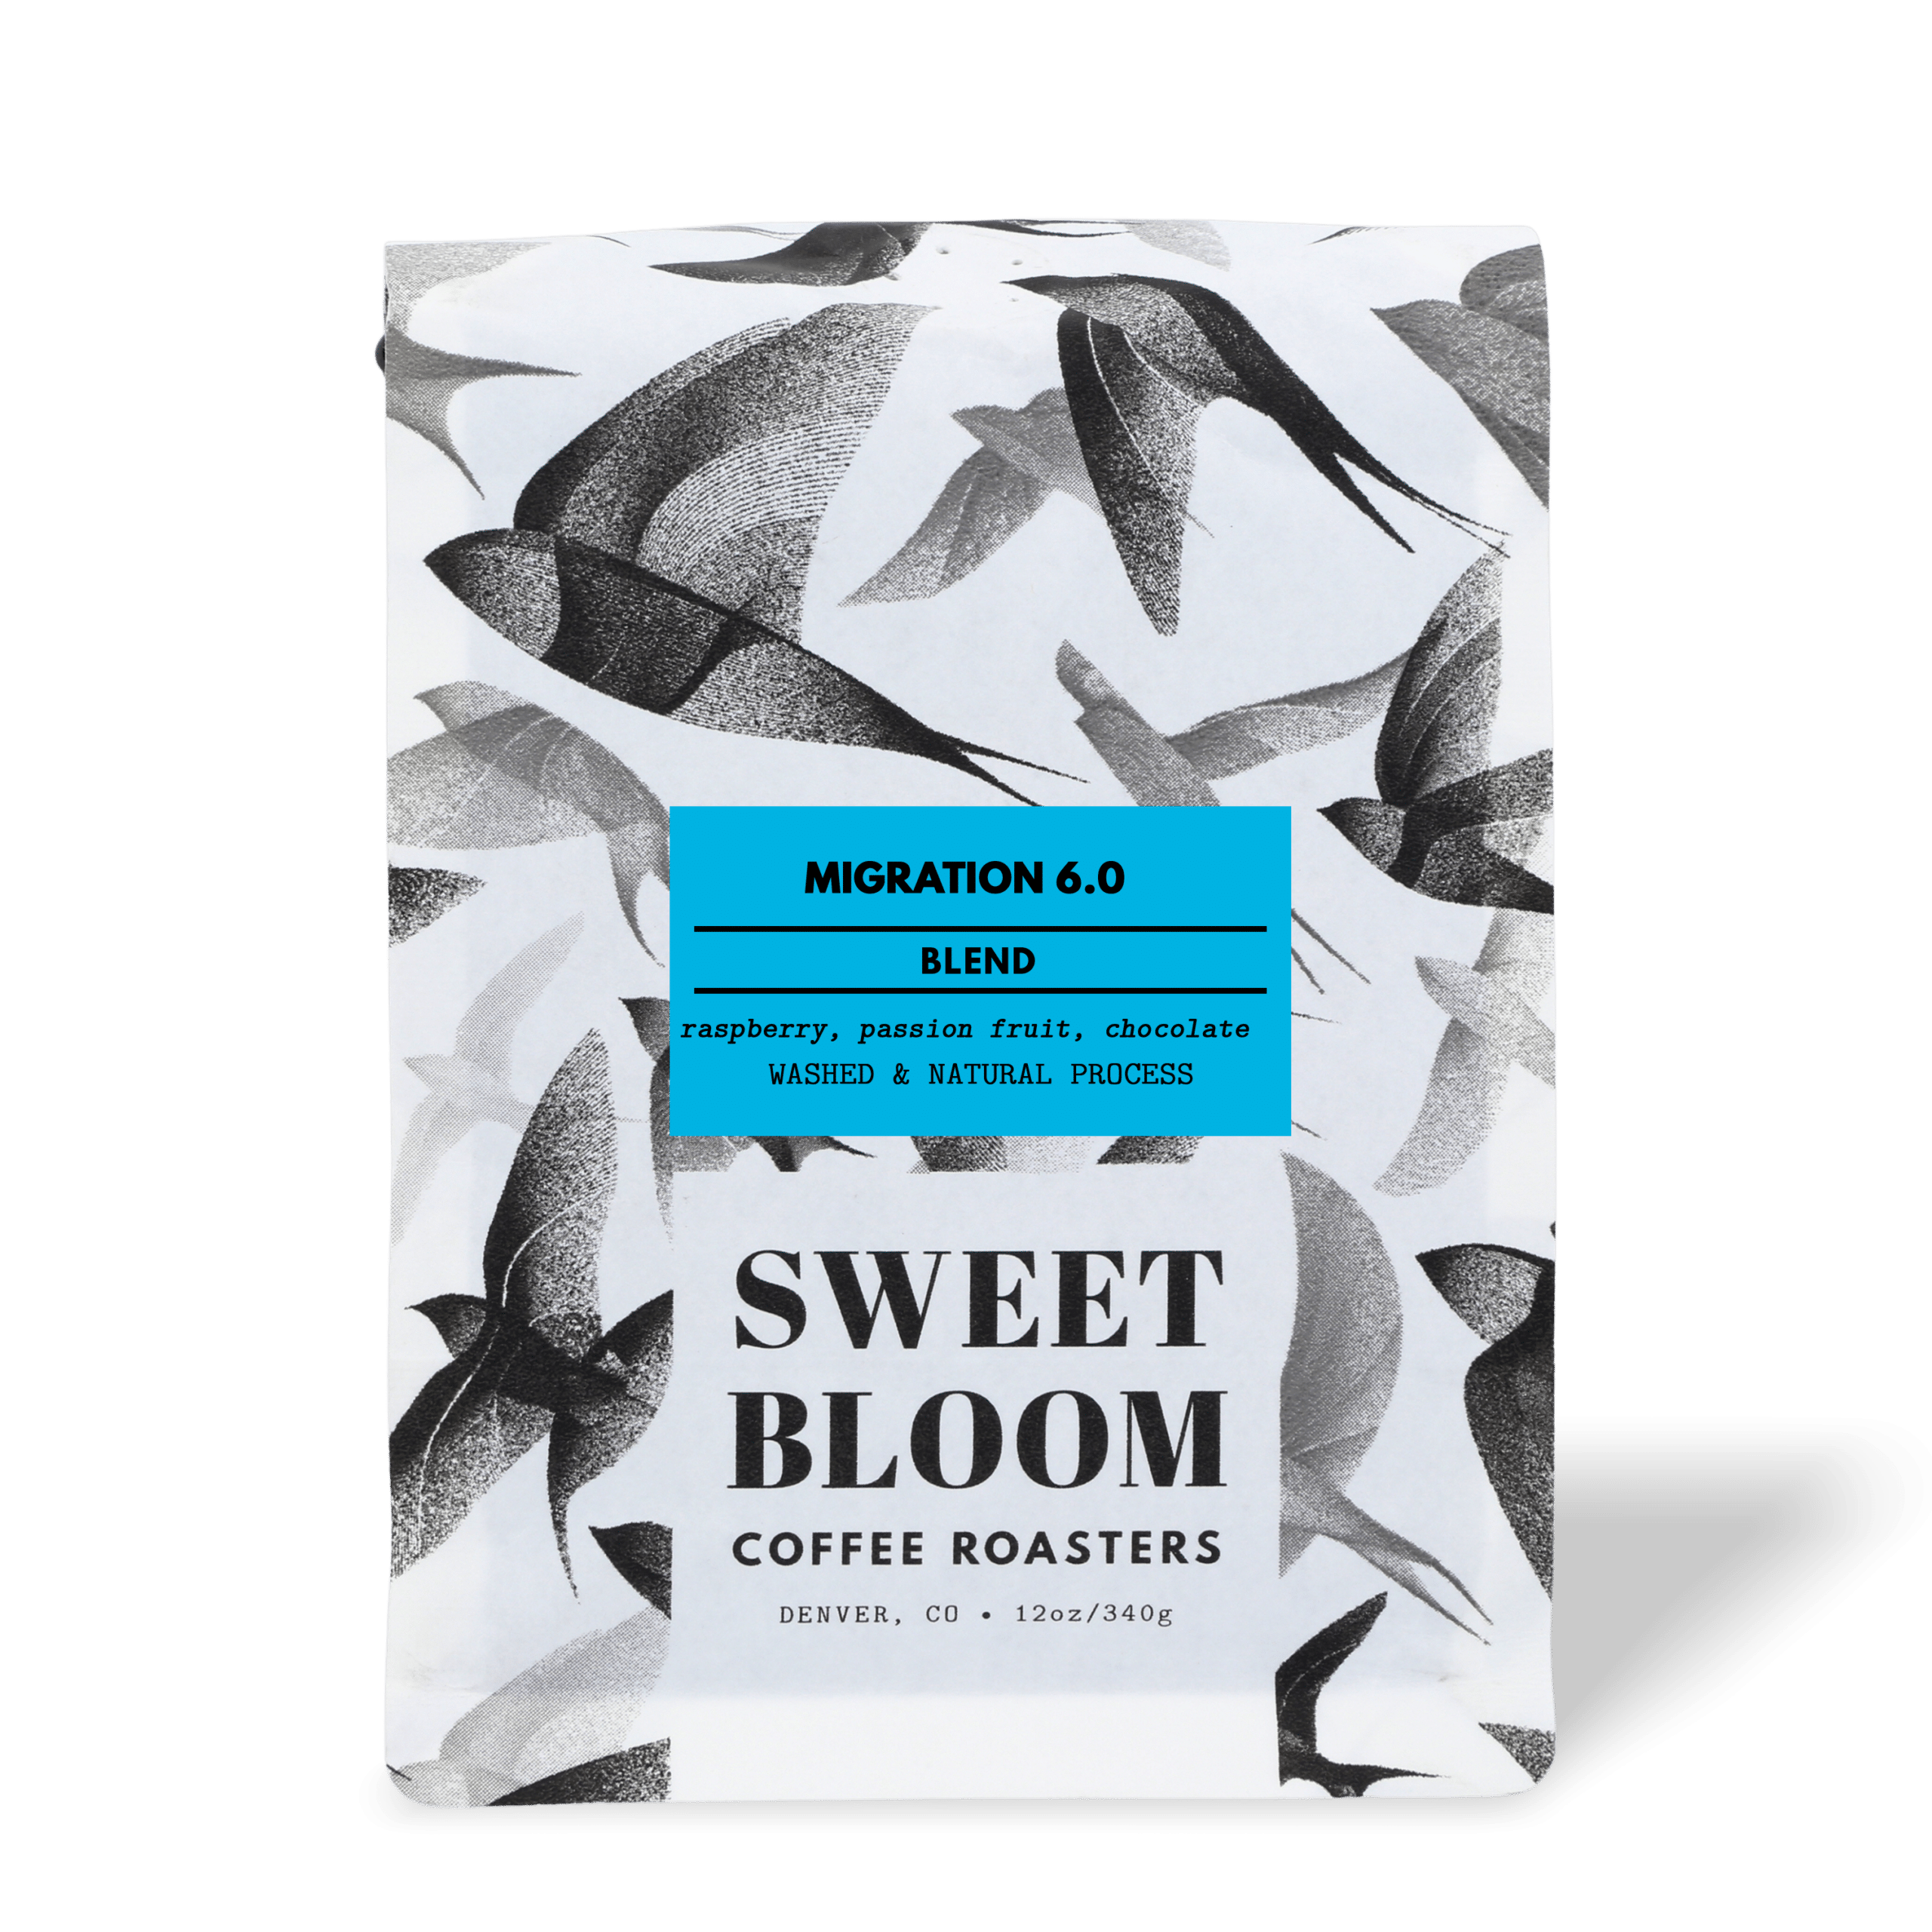 sweet bloom migration 6.0 coffee